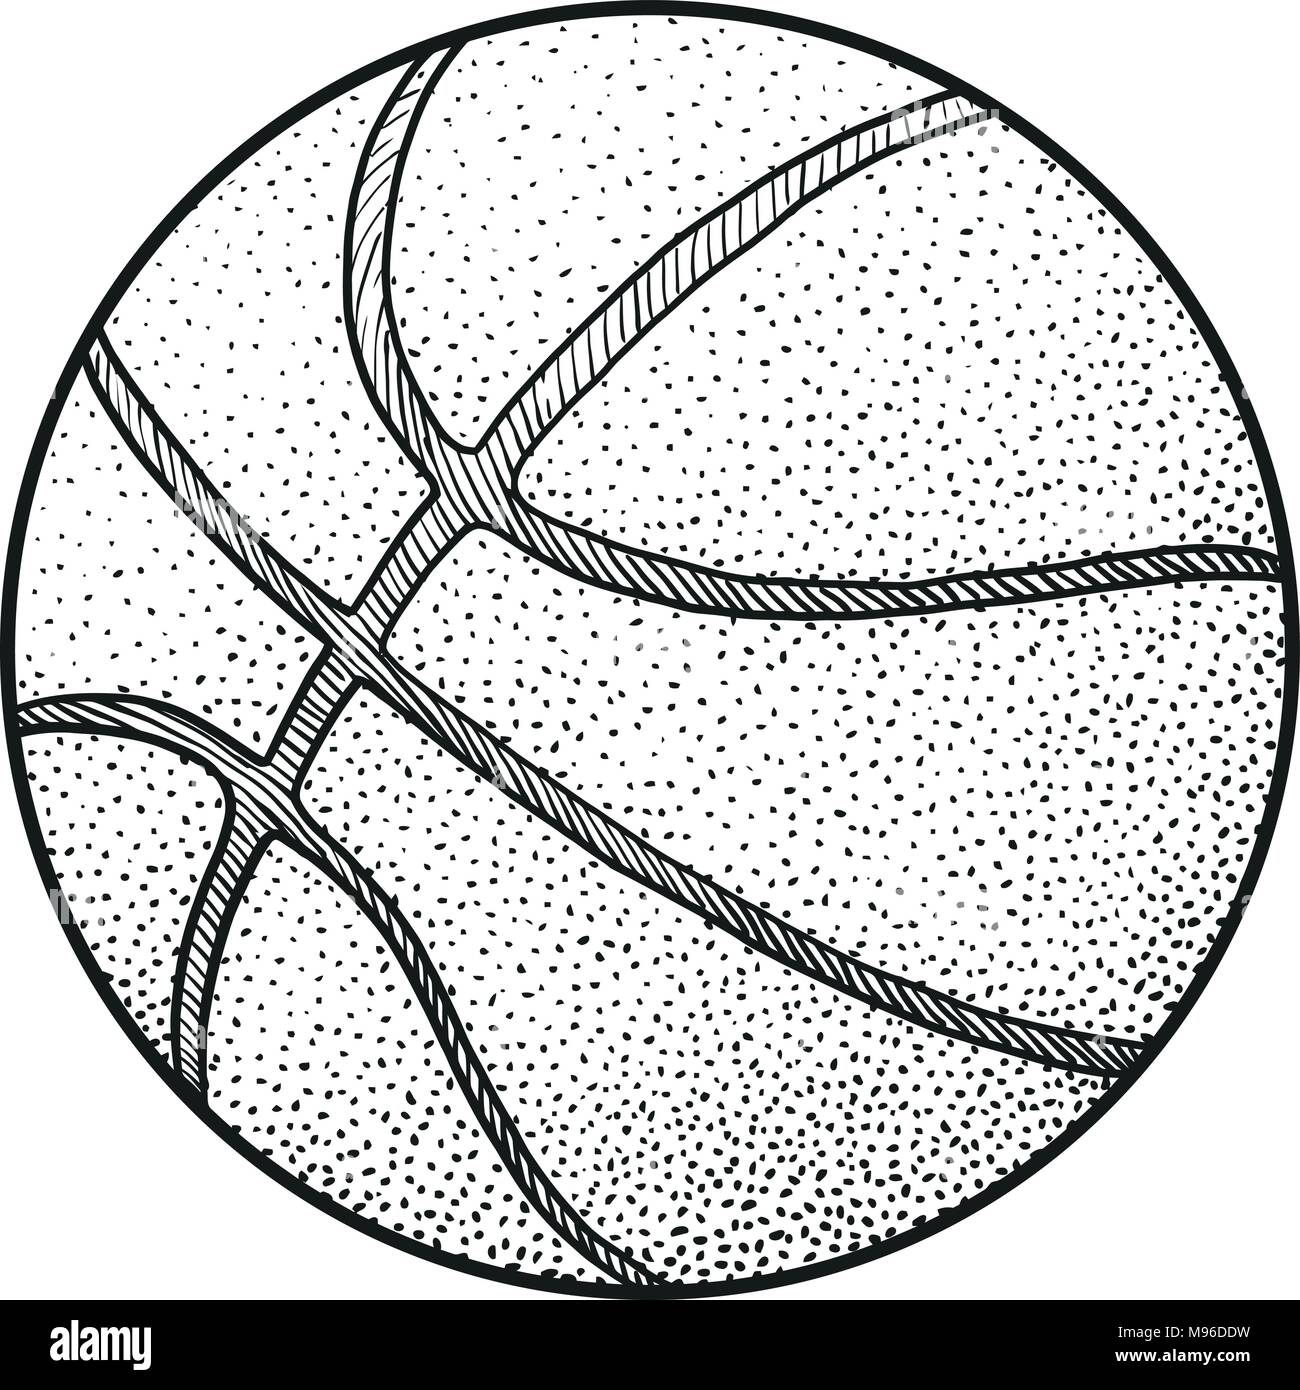 Illustration de basket-ball, dessin, gravure, encre, dessin au trait, vector Illustration de Vecteur